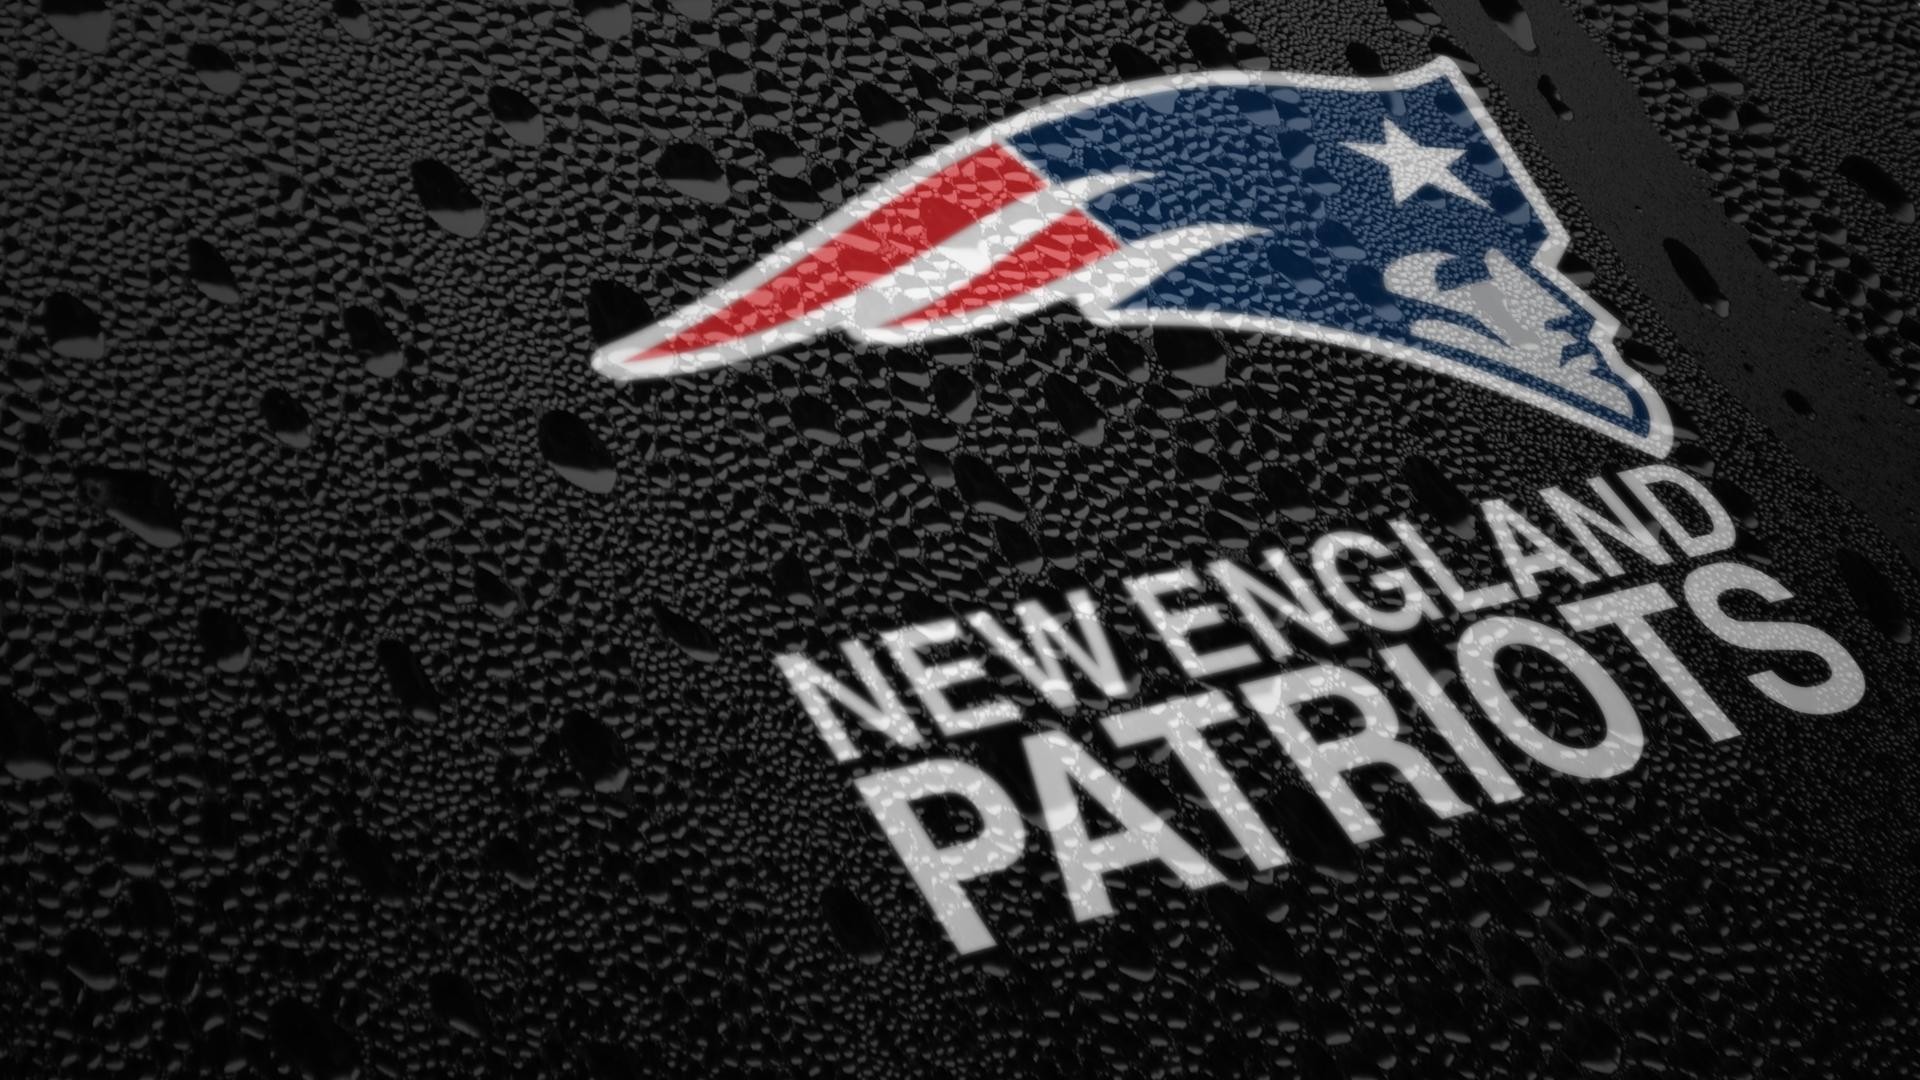 New England Patriots Screensaver Wallpaper Image